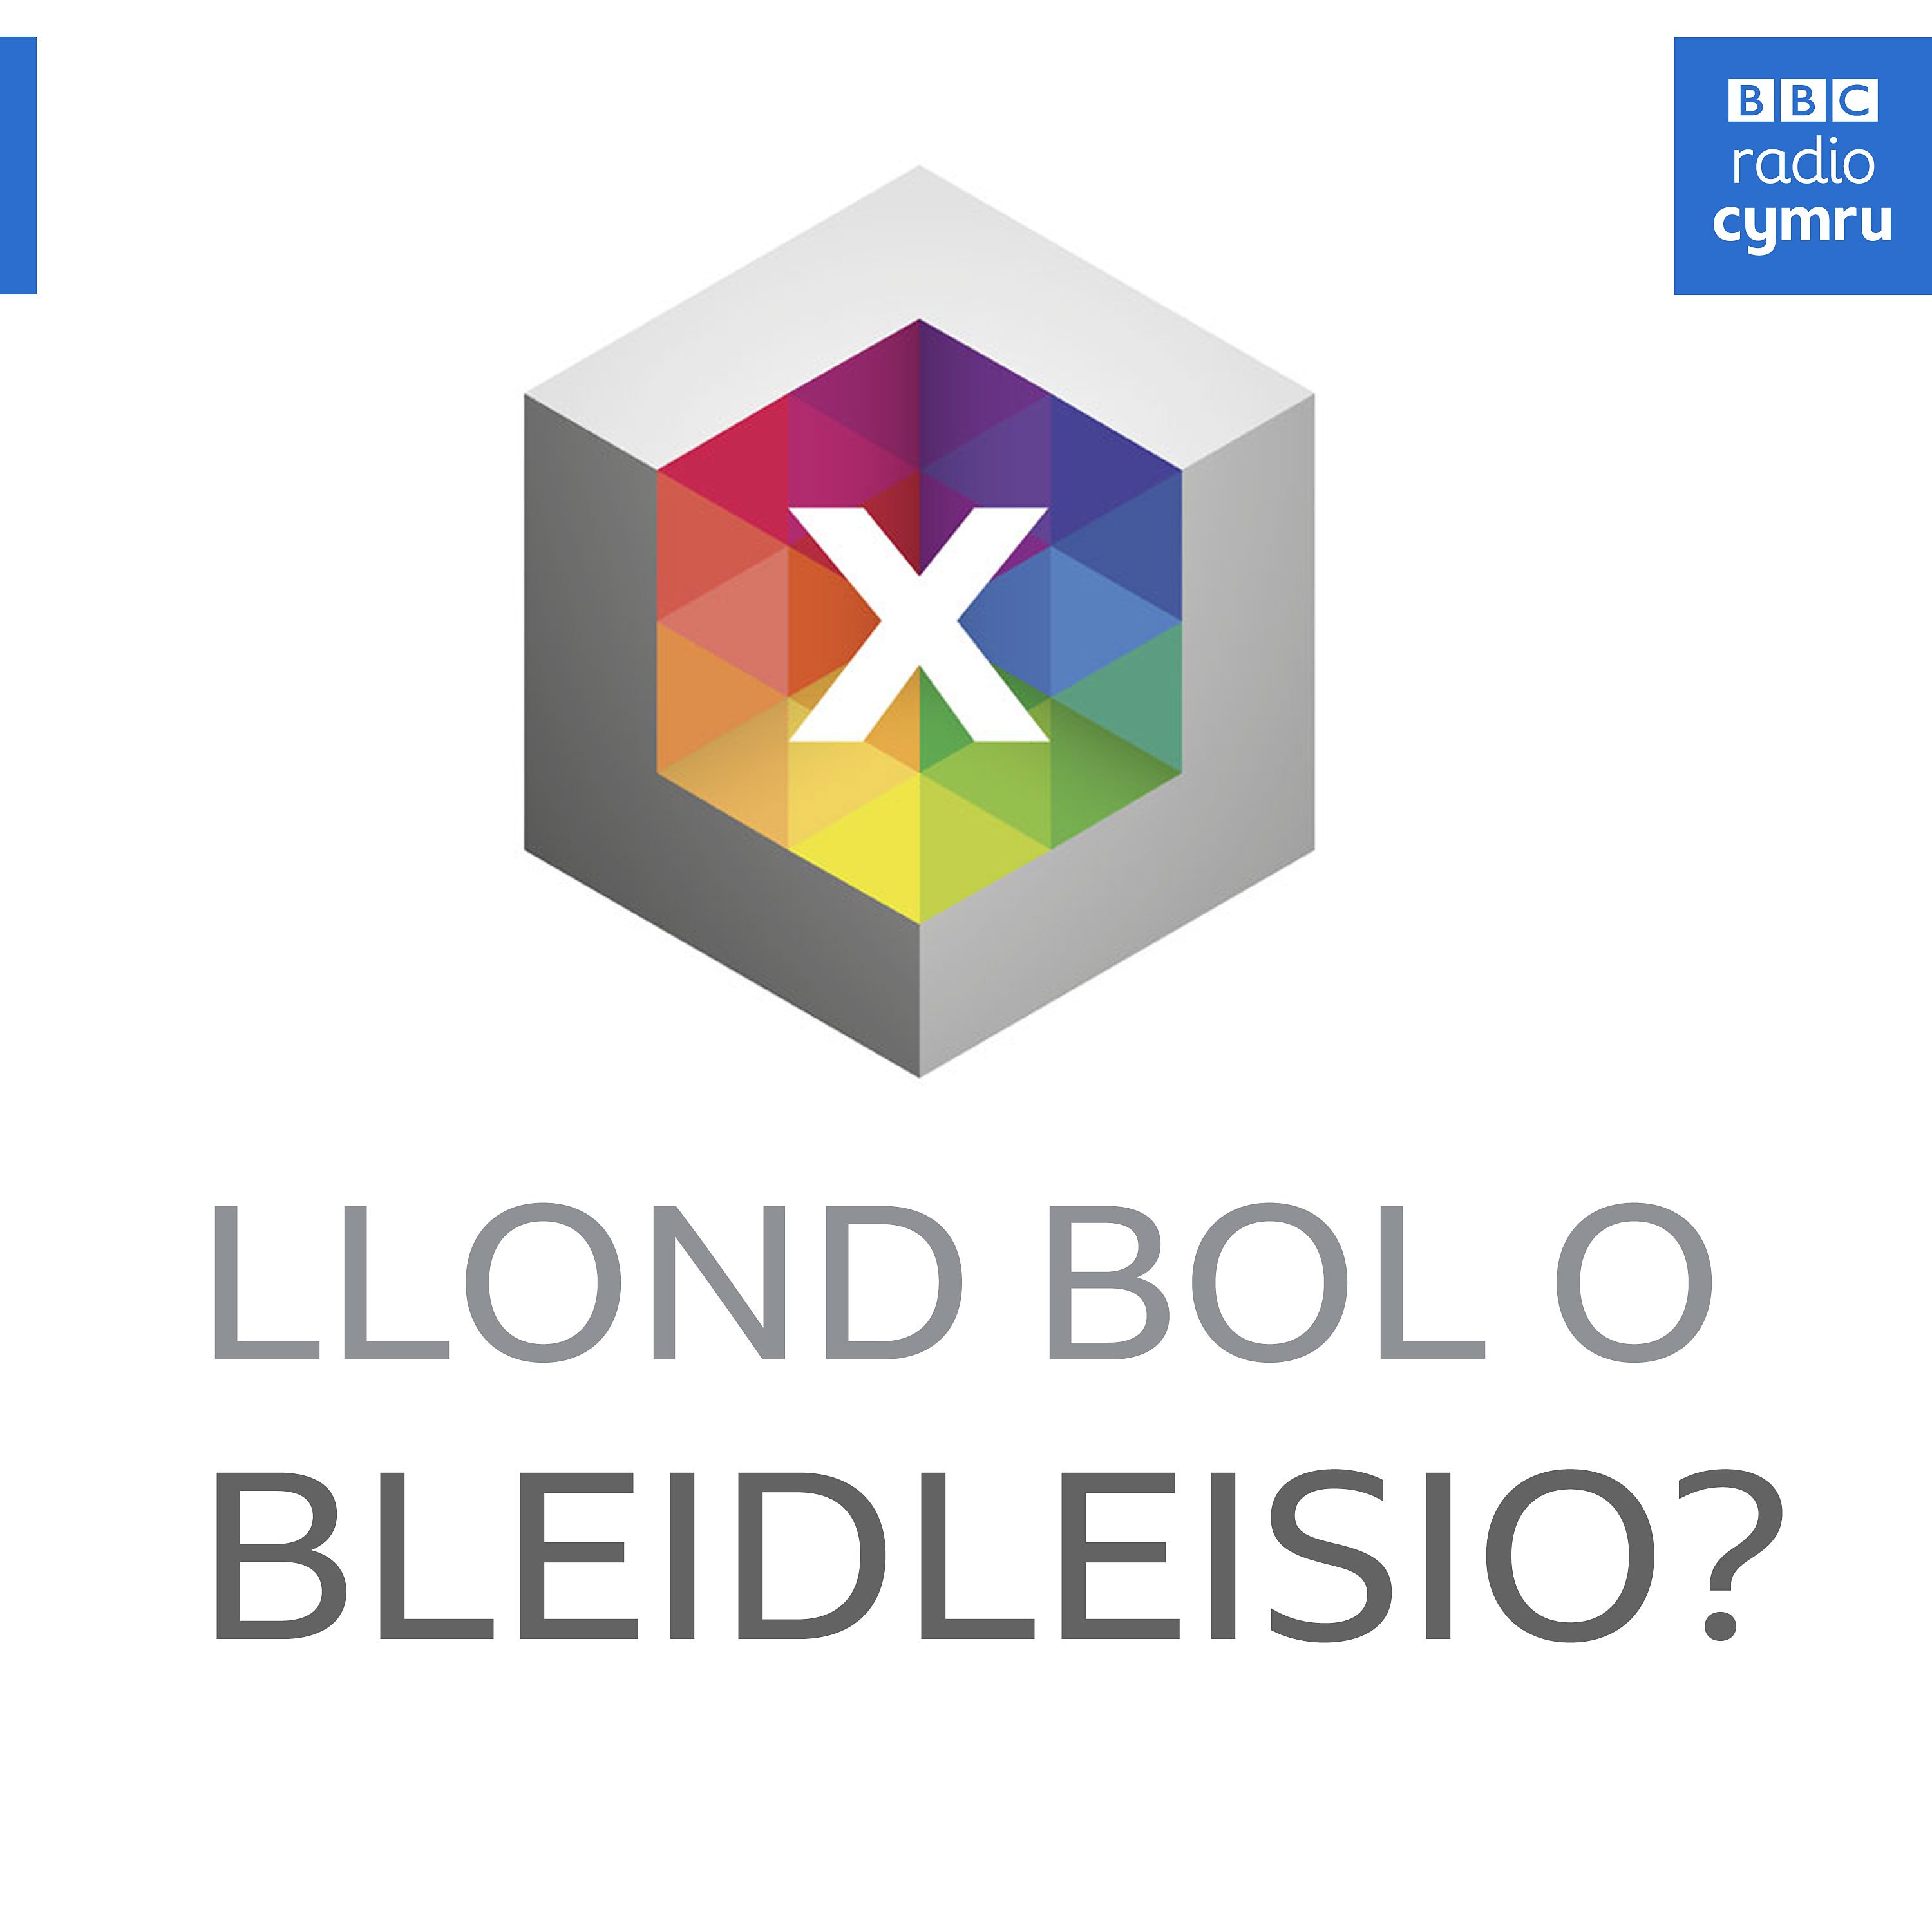 Llond Bol o Bledleisio